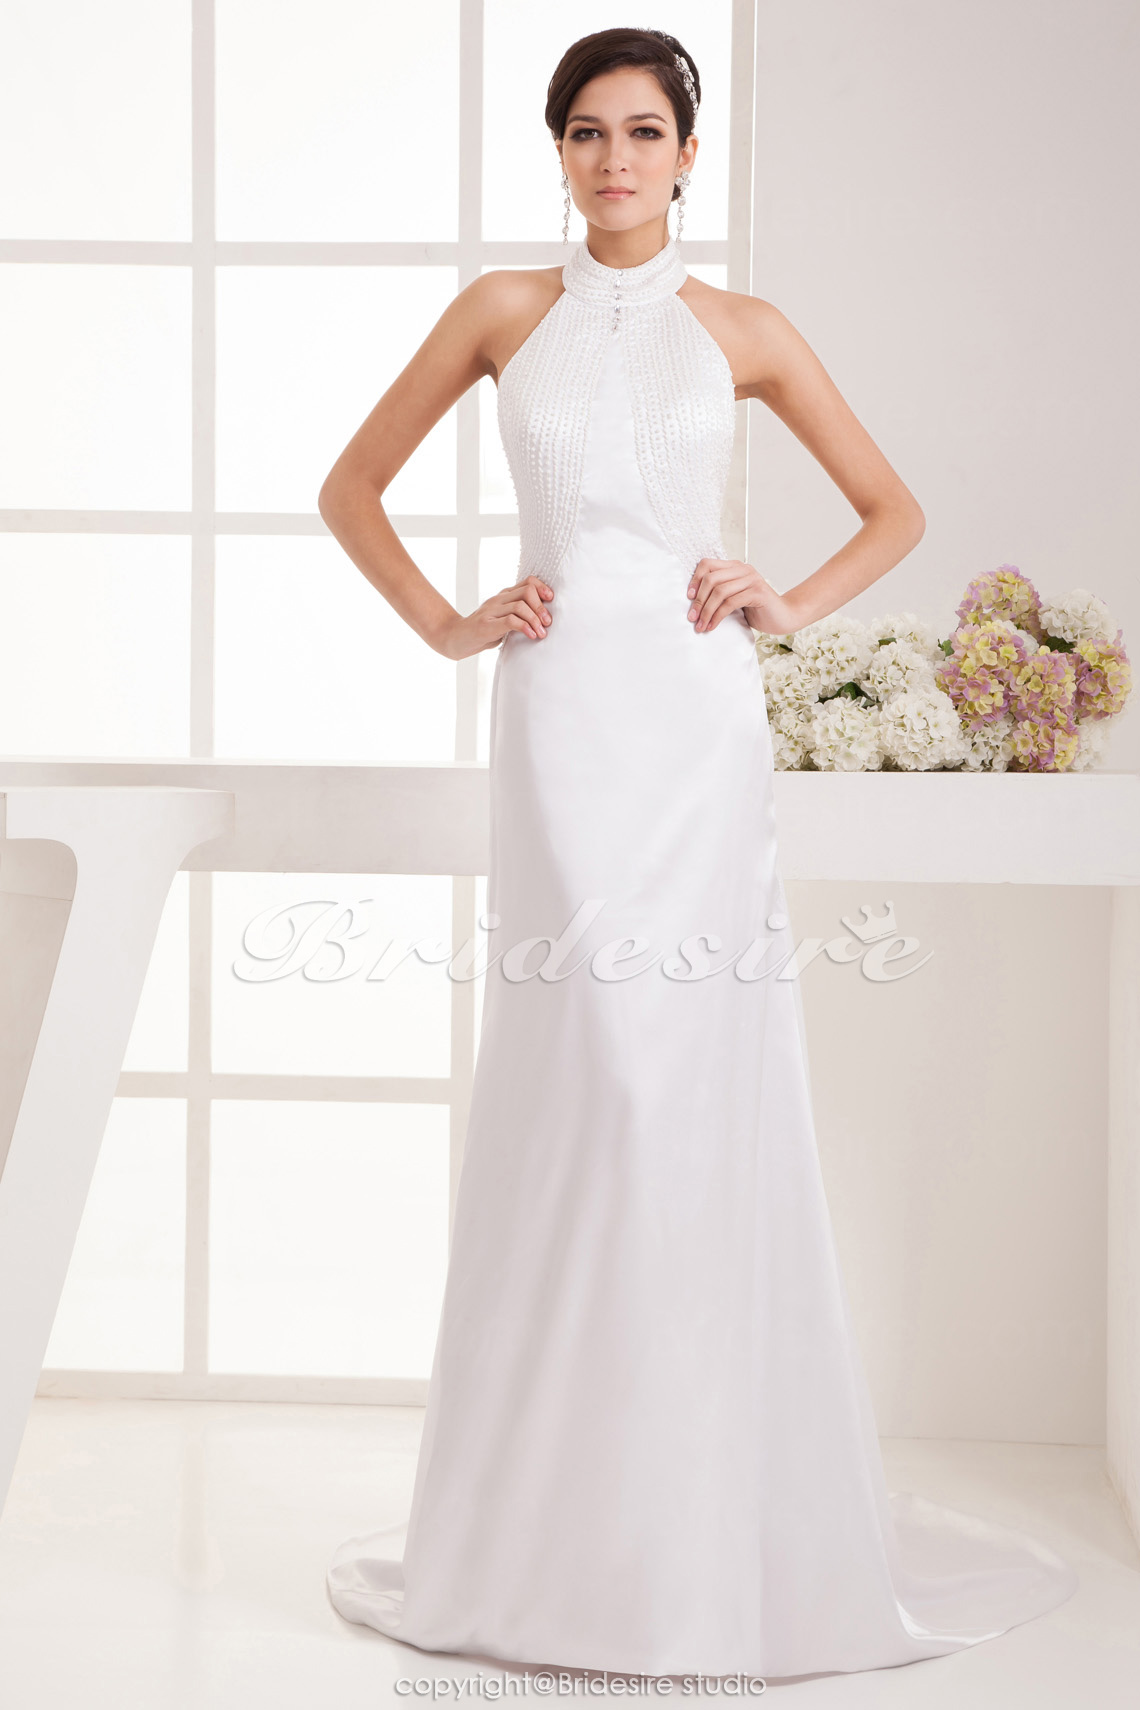 A-line Halter Floor-length Court Train Sleeveless Satin Wedding Dress